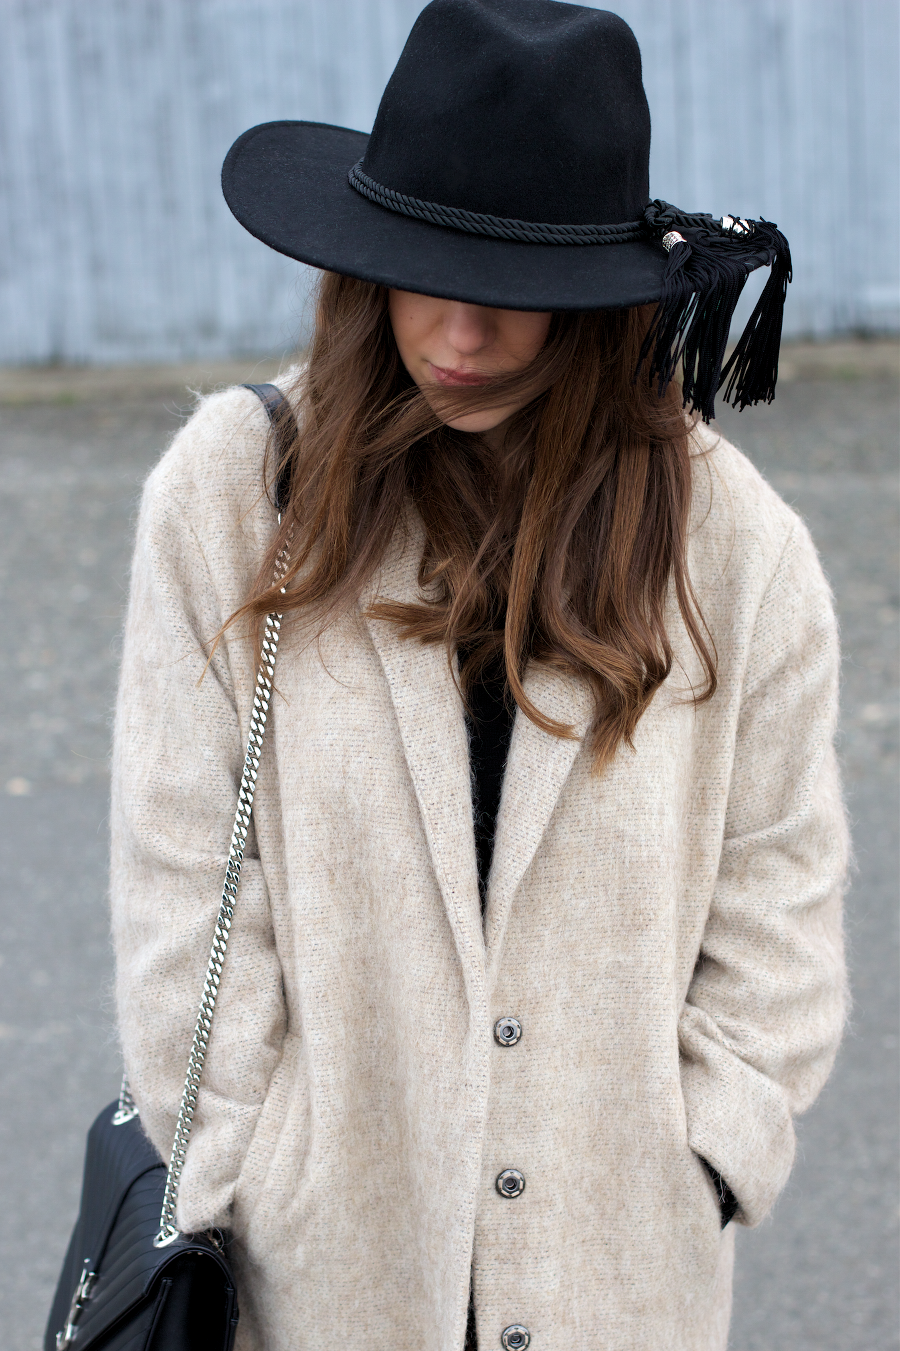 Asos Camel Coat Black Hat YSL